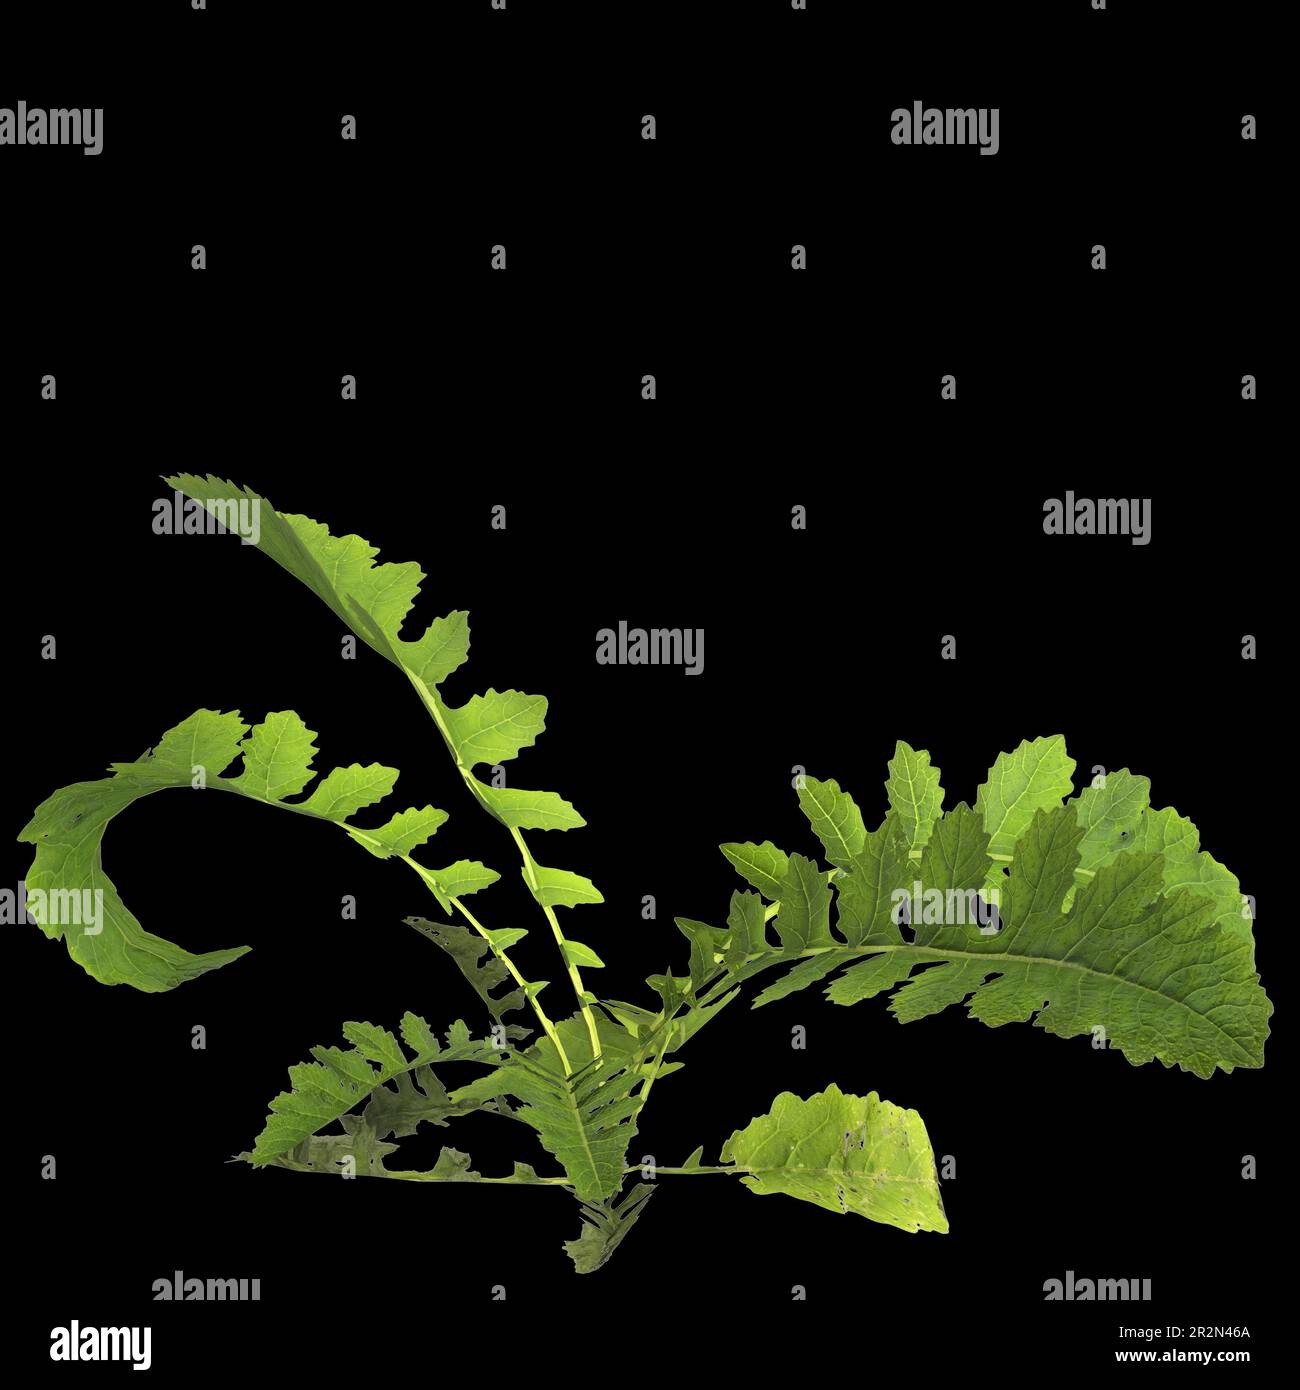 3d illustration of rorippa palustris plant isolated on black background Stock Photo